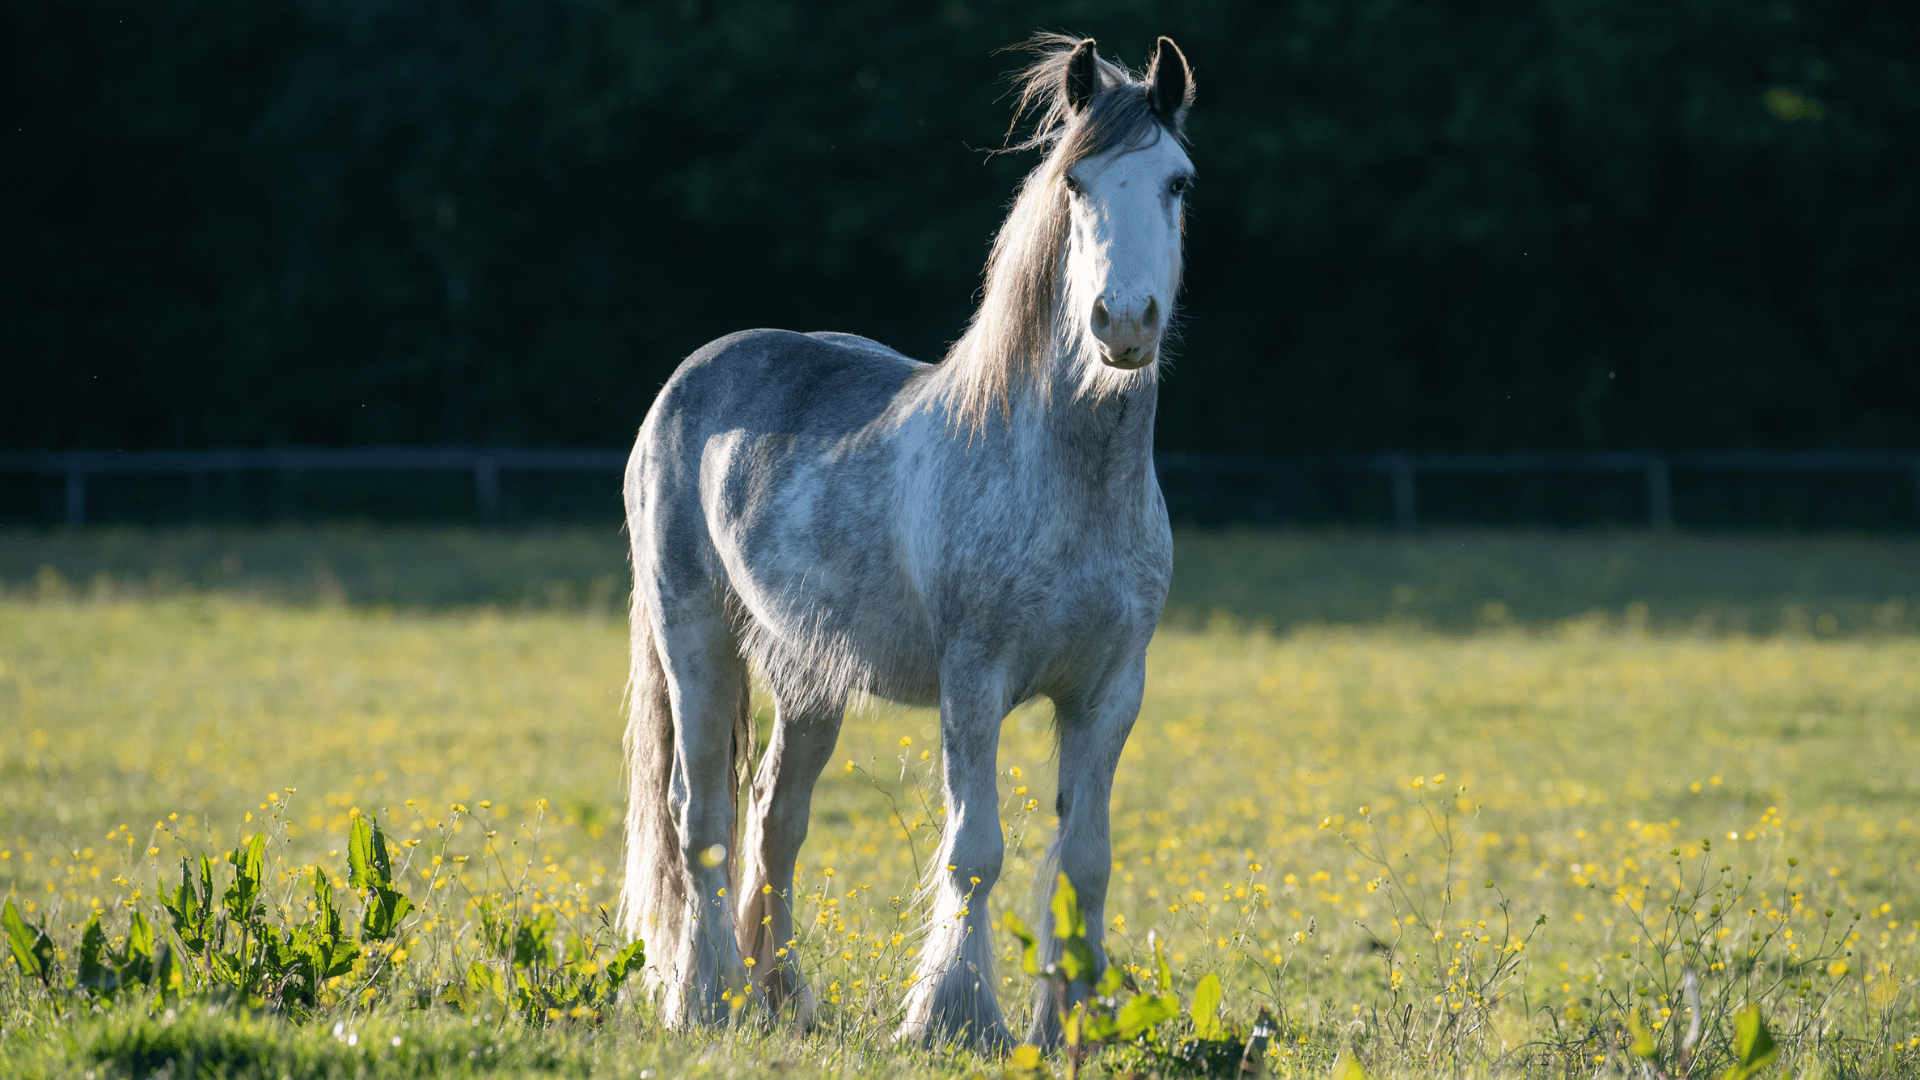 White/ grey horse